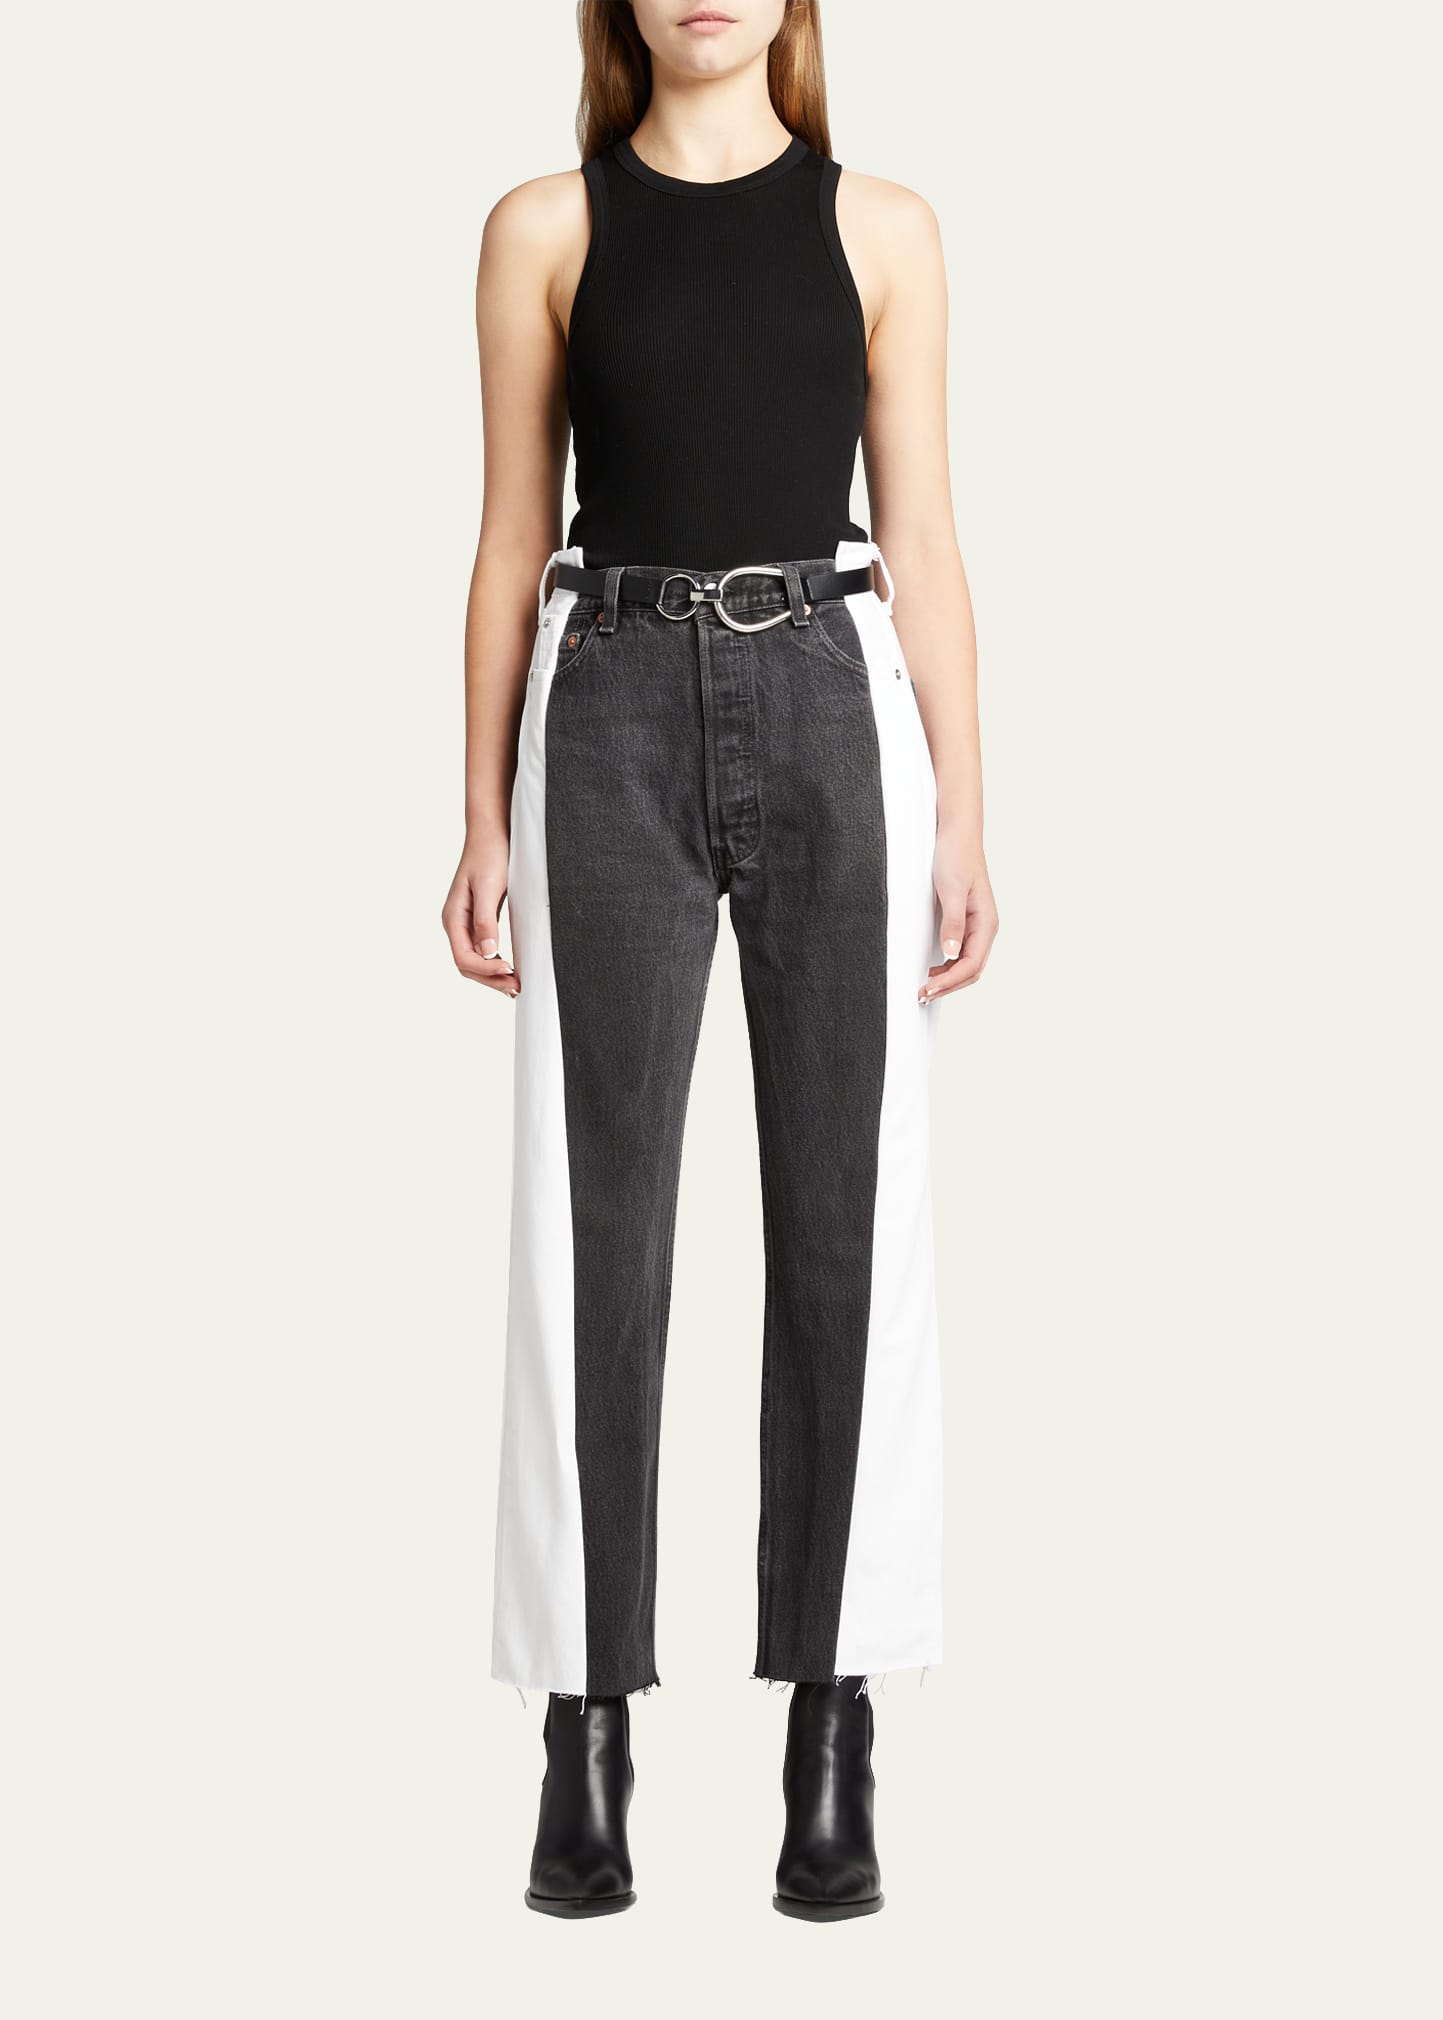 EB DENIM Black & Whites Two-Tone Jeans